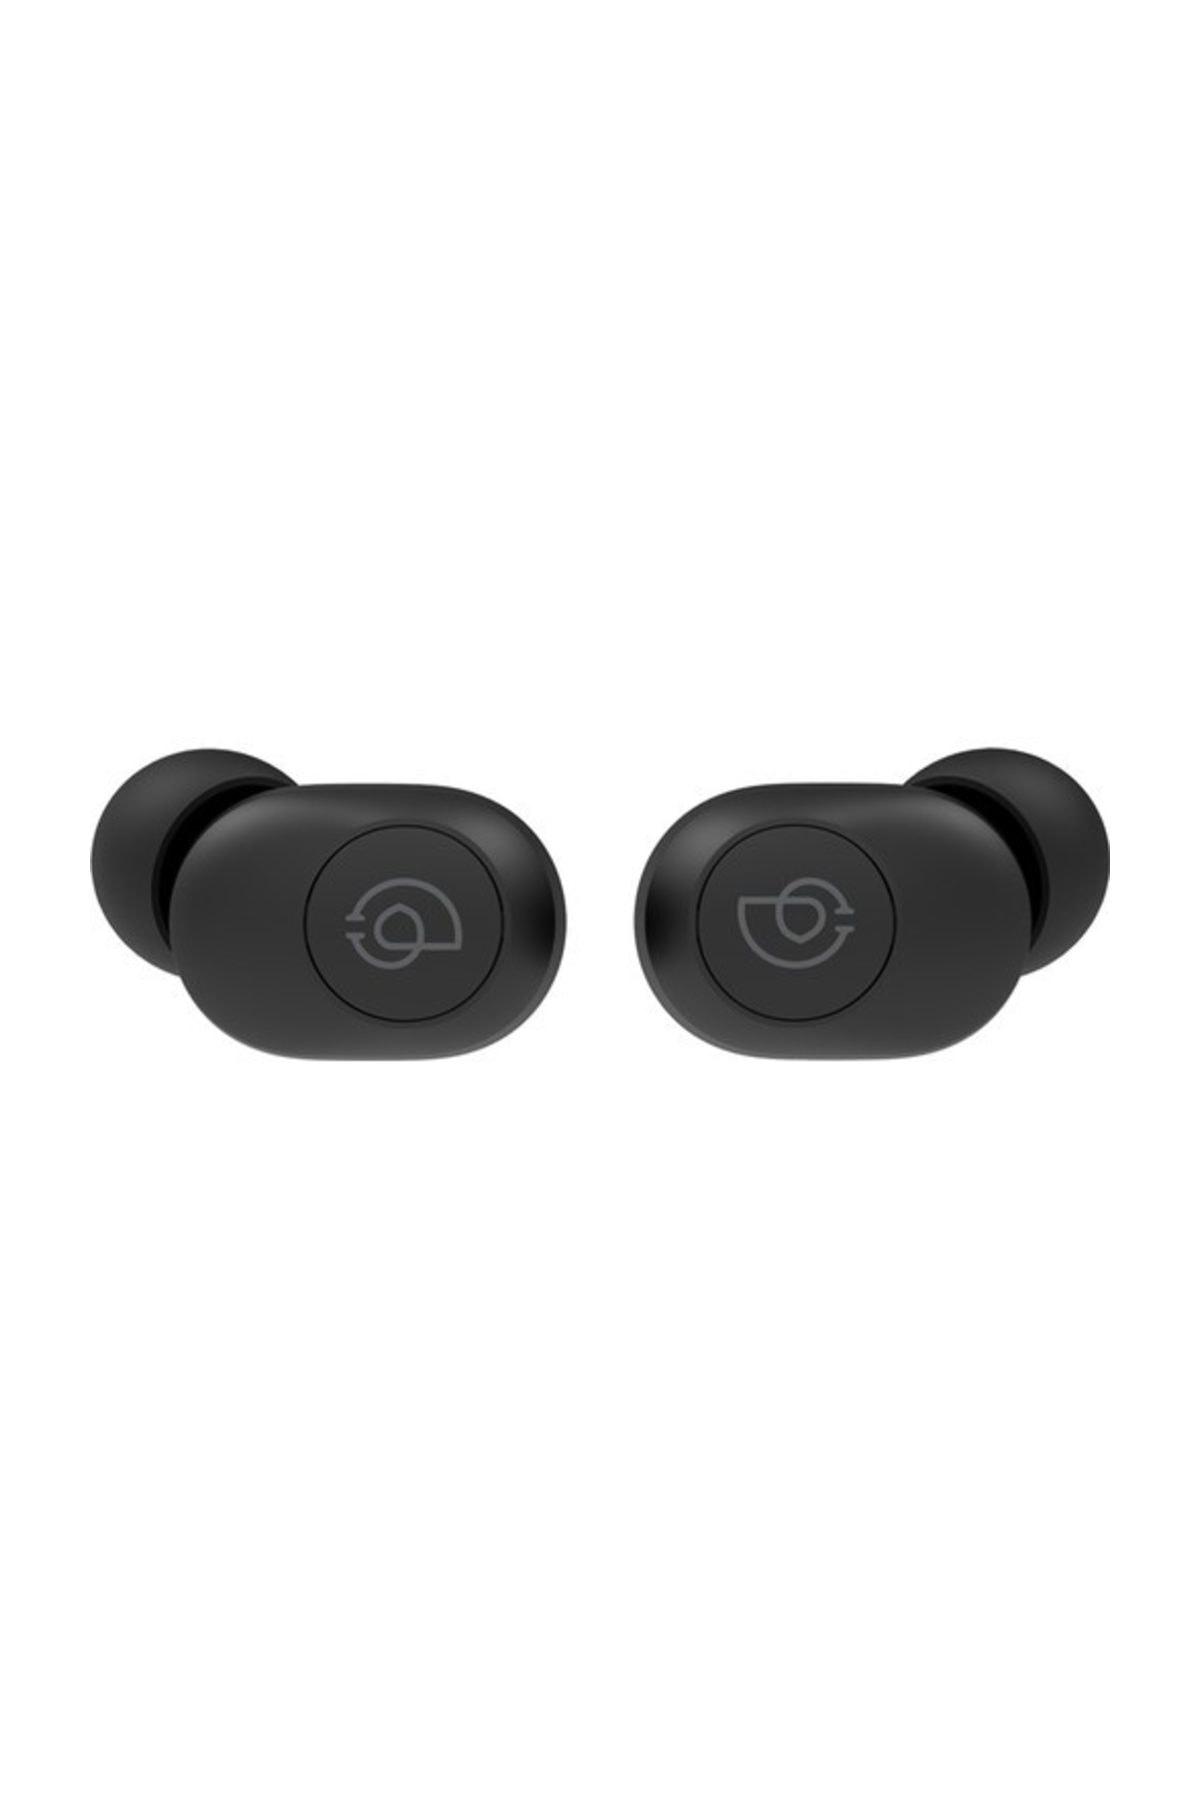 Haylou GT2 Kablosuz 5.0 Bluetooth Kulaklık